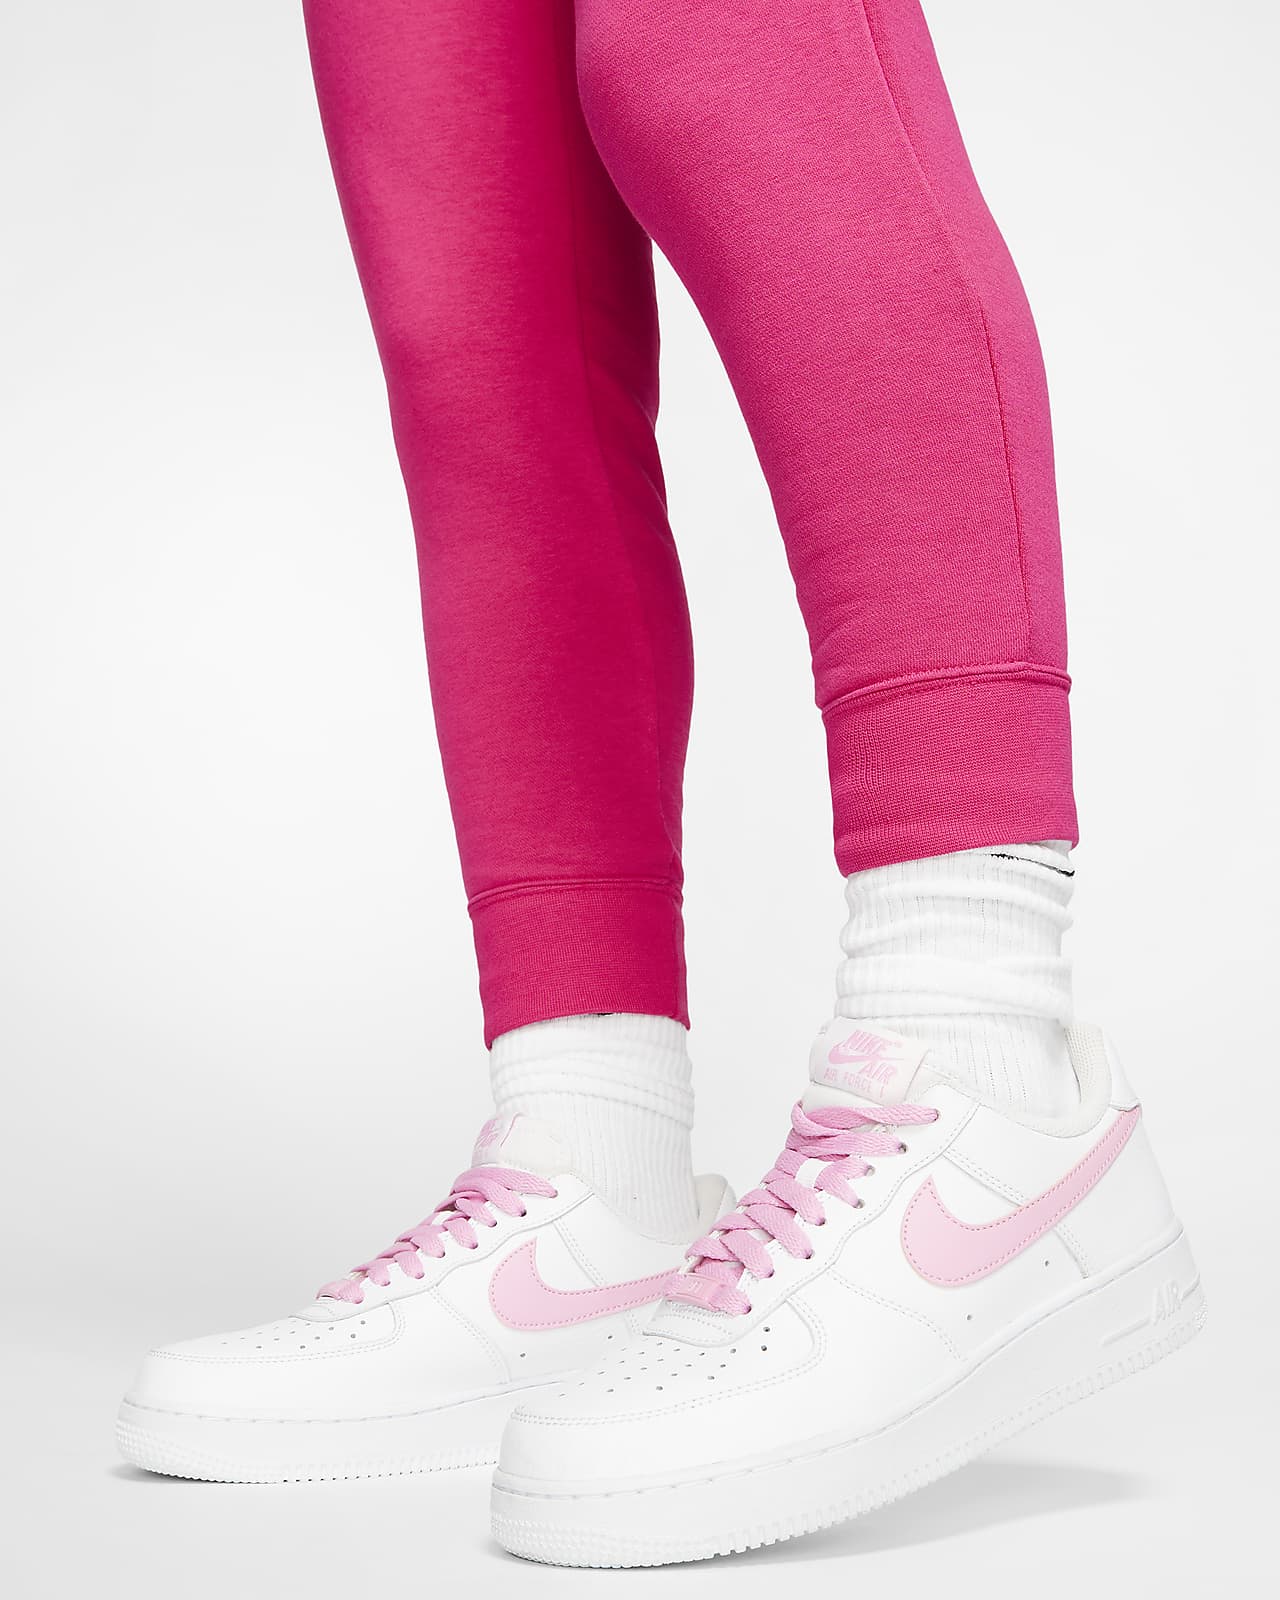 Nike Air Women's Mid-Rise Fleece Joggers. Nike SK